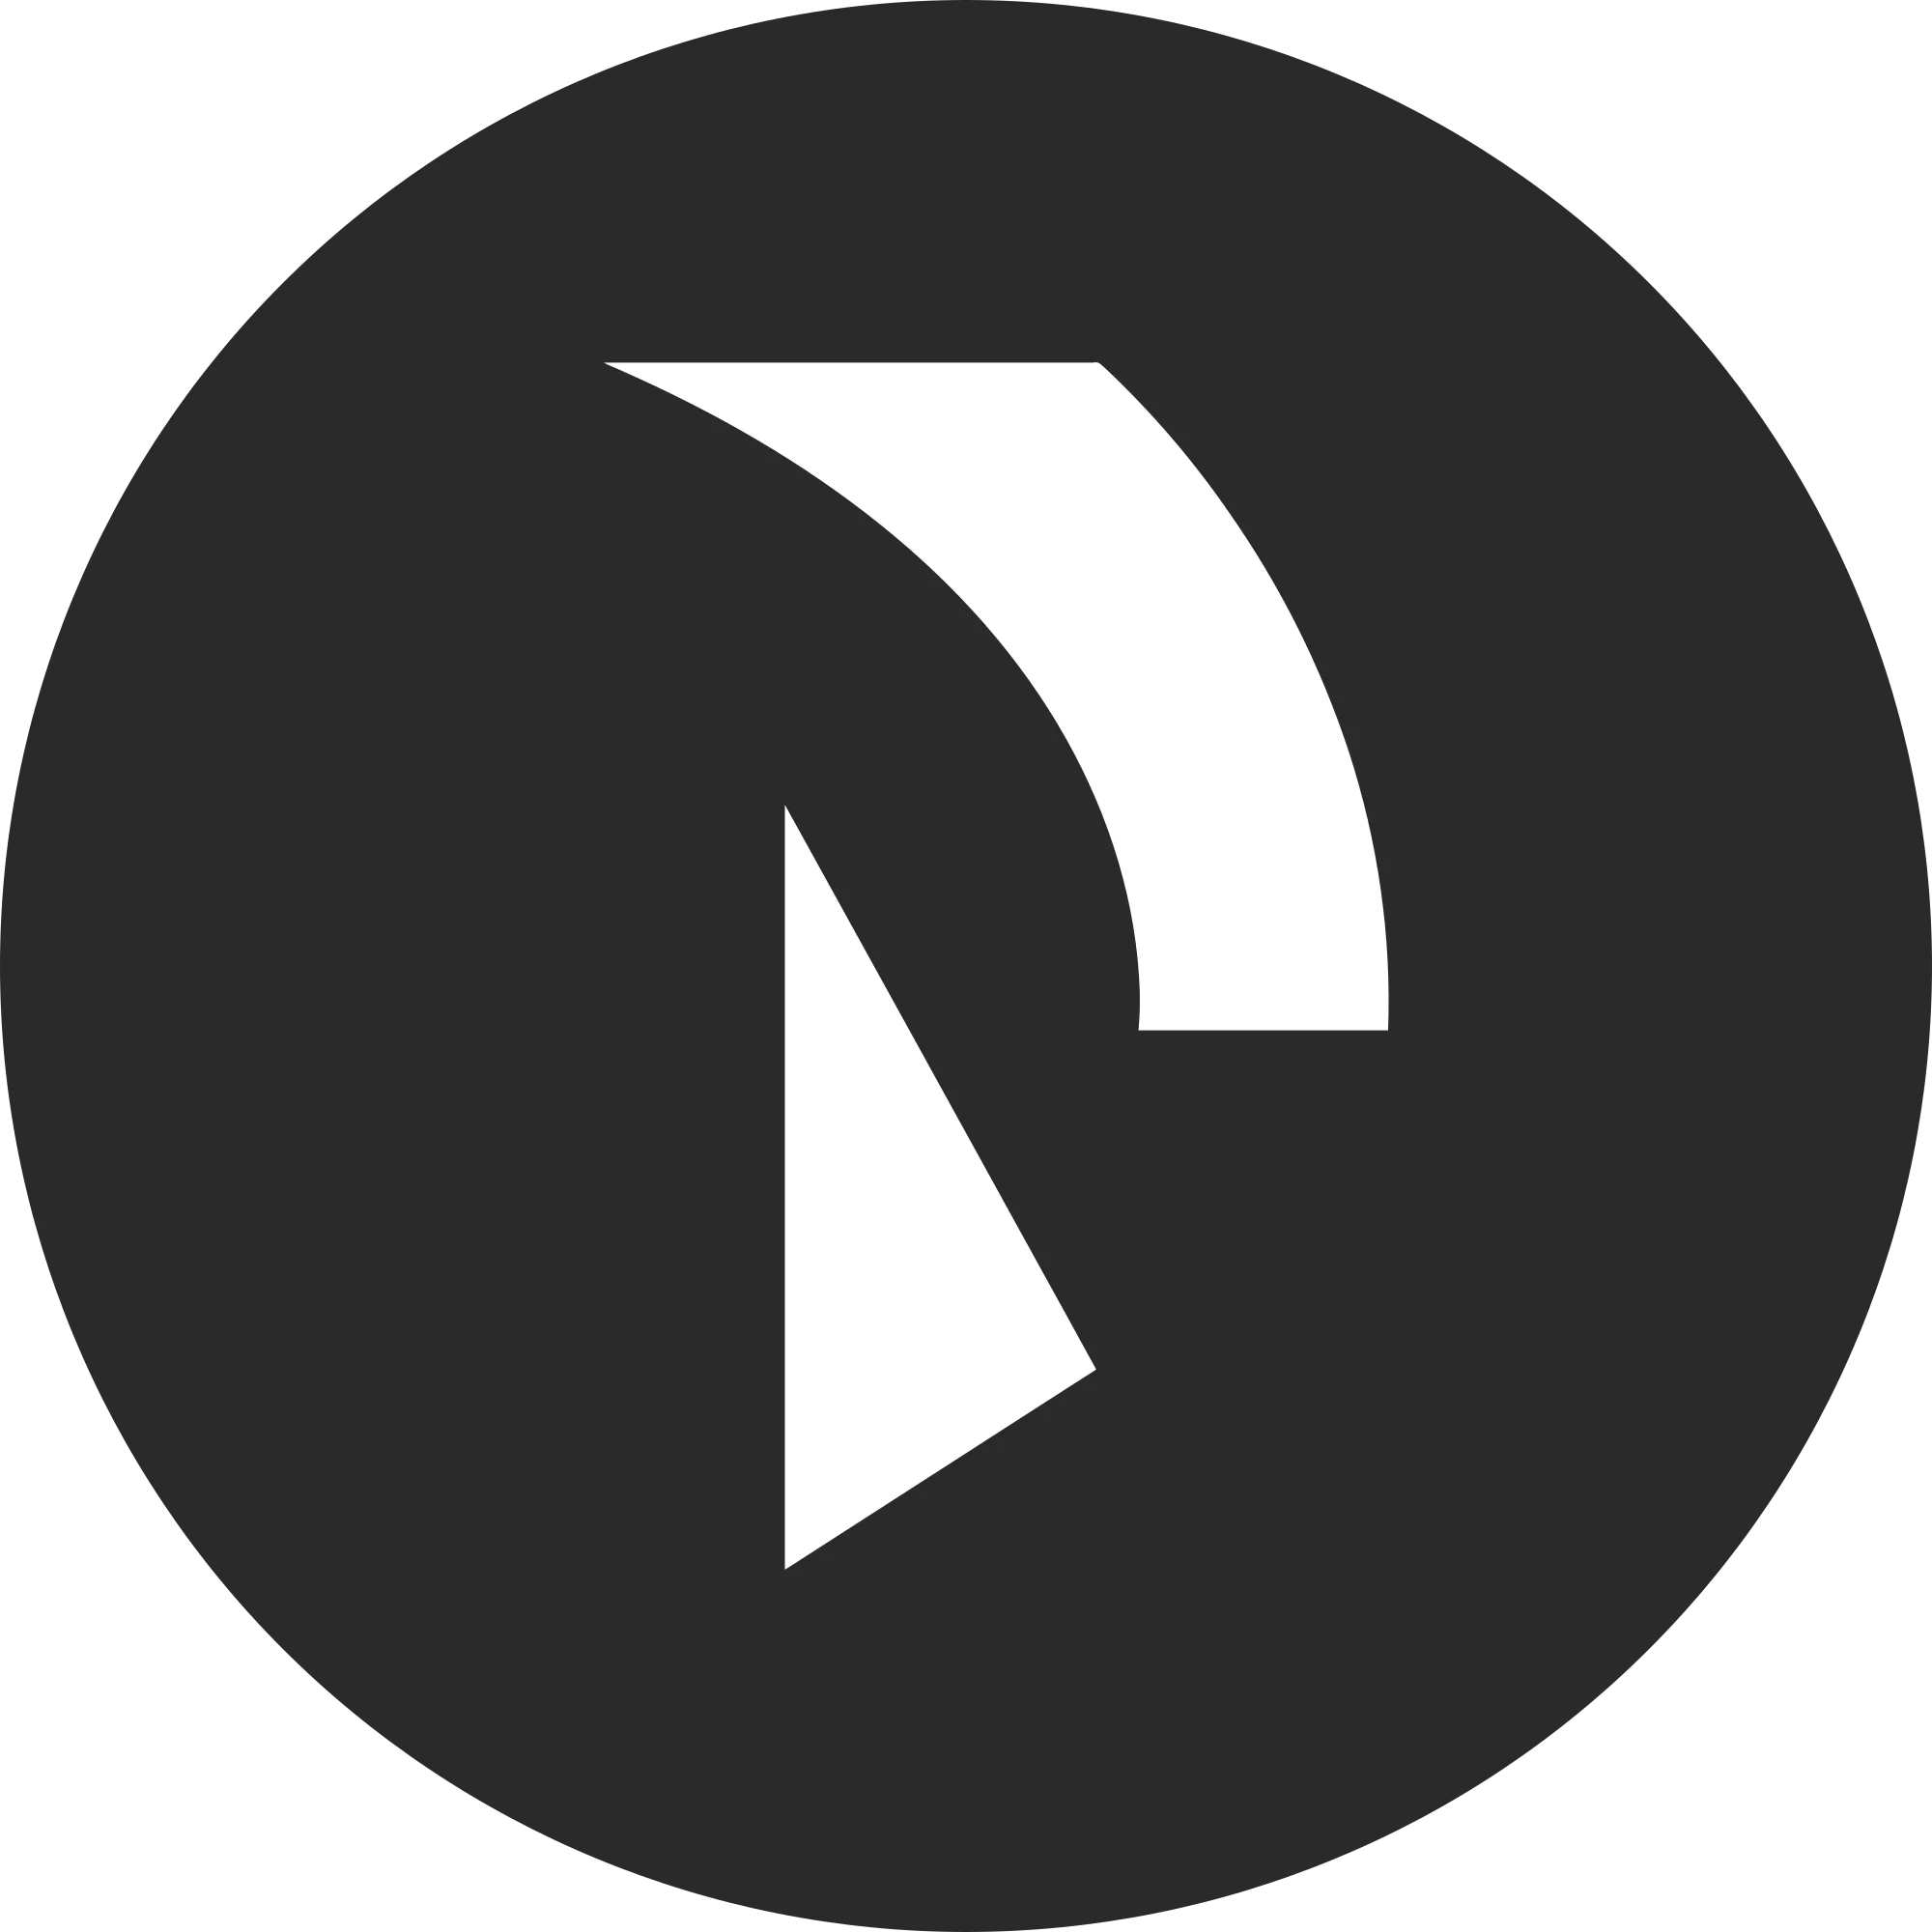 Raiden Network Token logo in png format